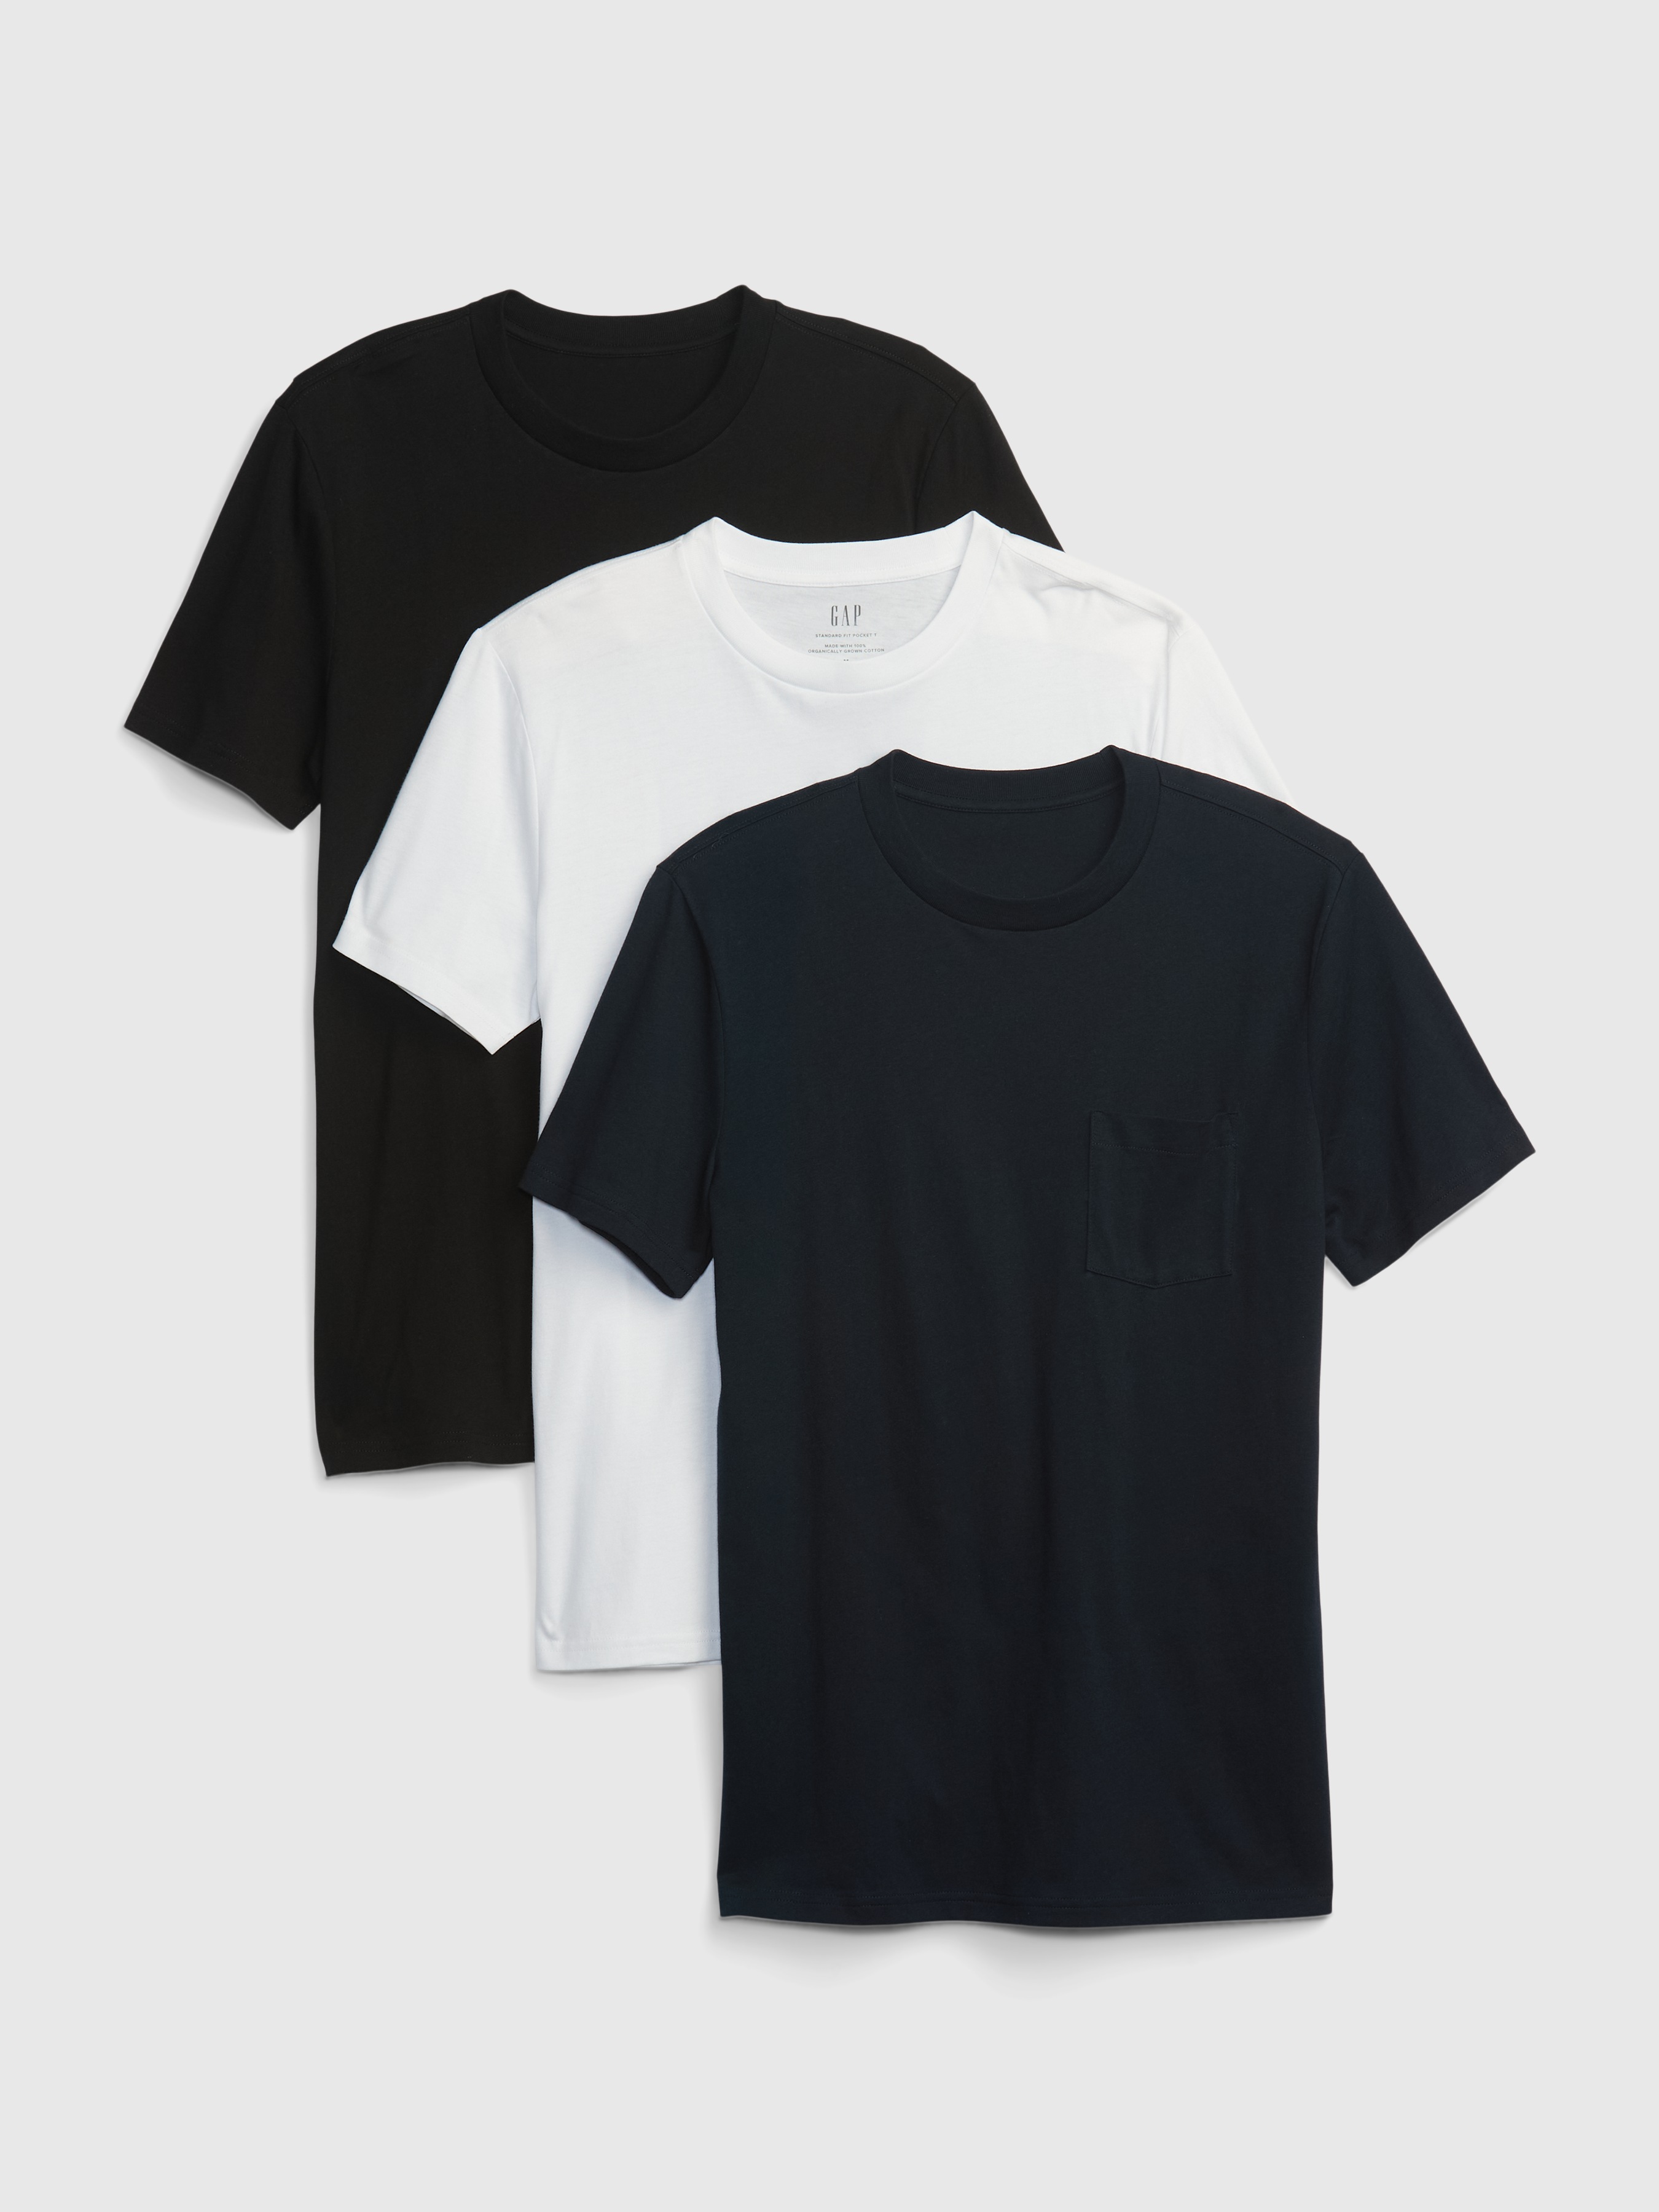 Gap Brand T Shirt | lupon.gov.ph